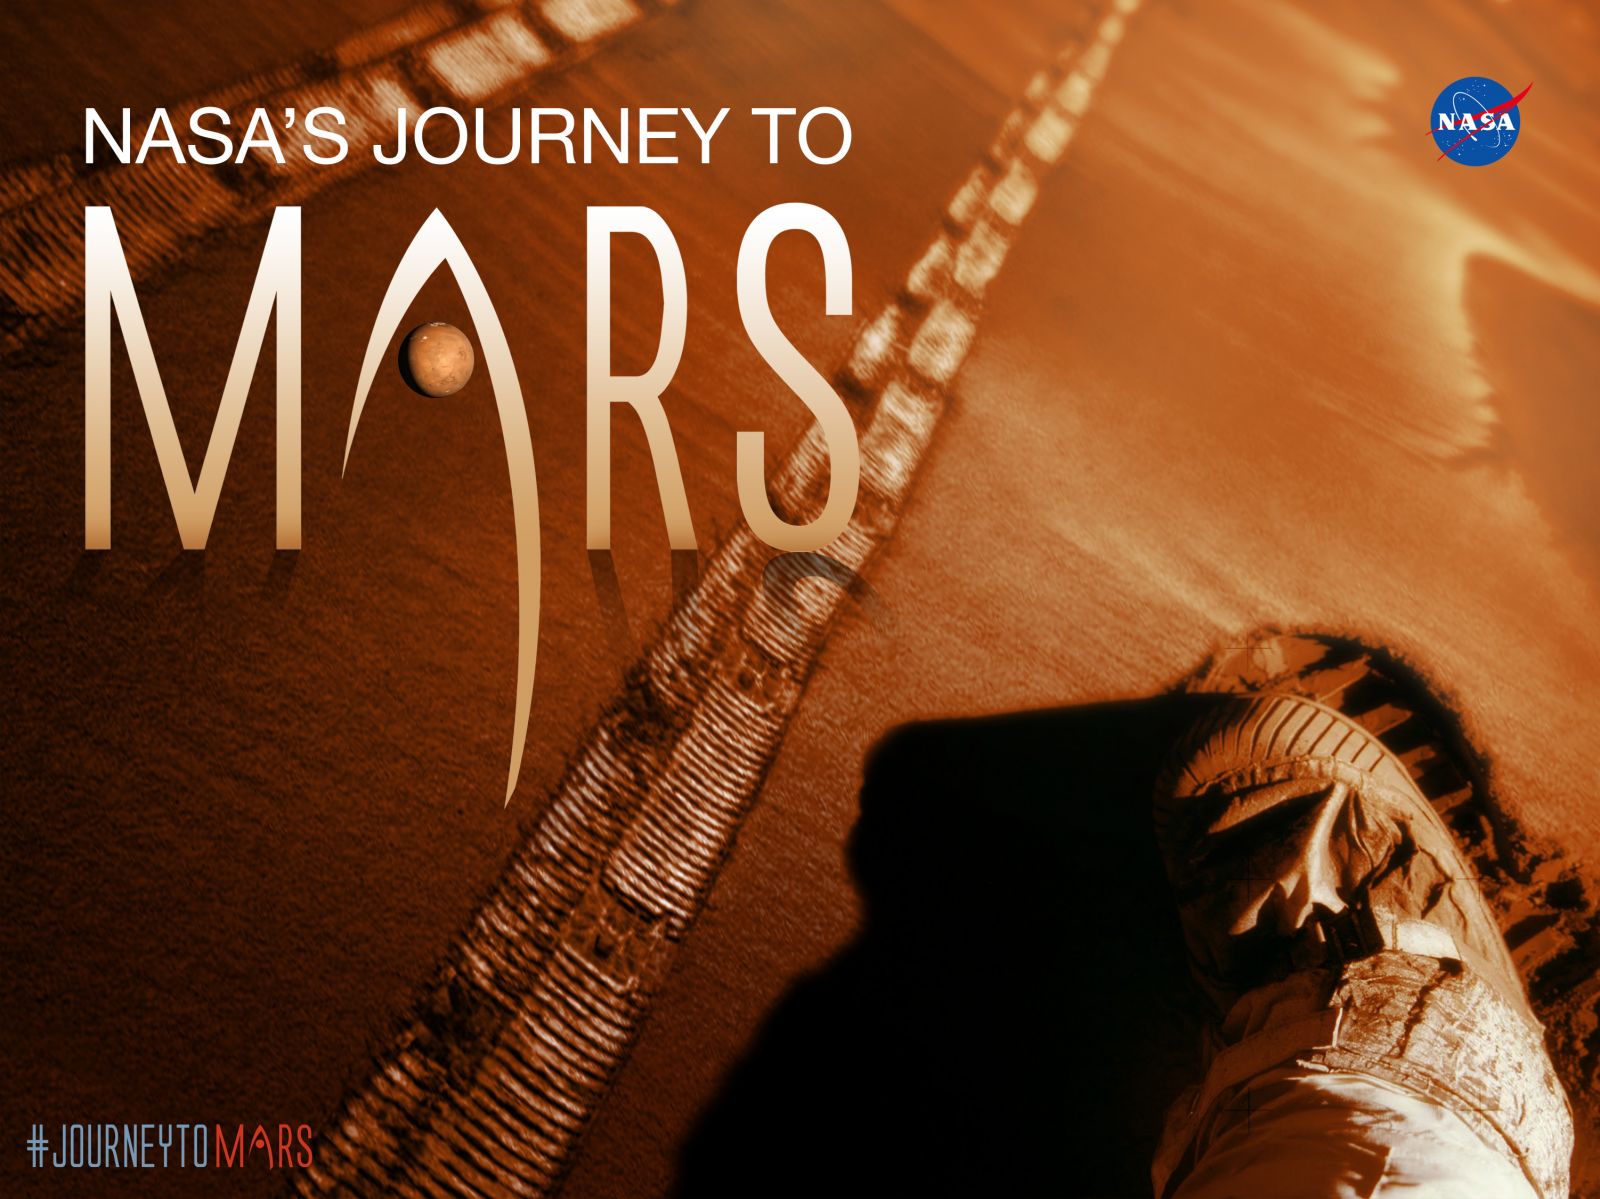 Rover tracks and an astronaut bootprint on Mars.